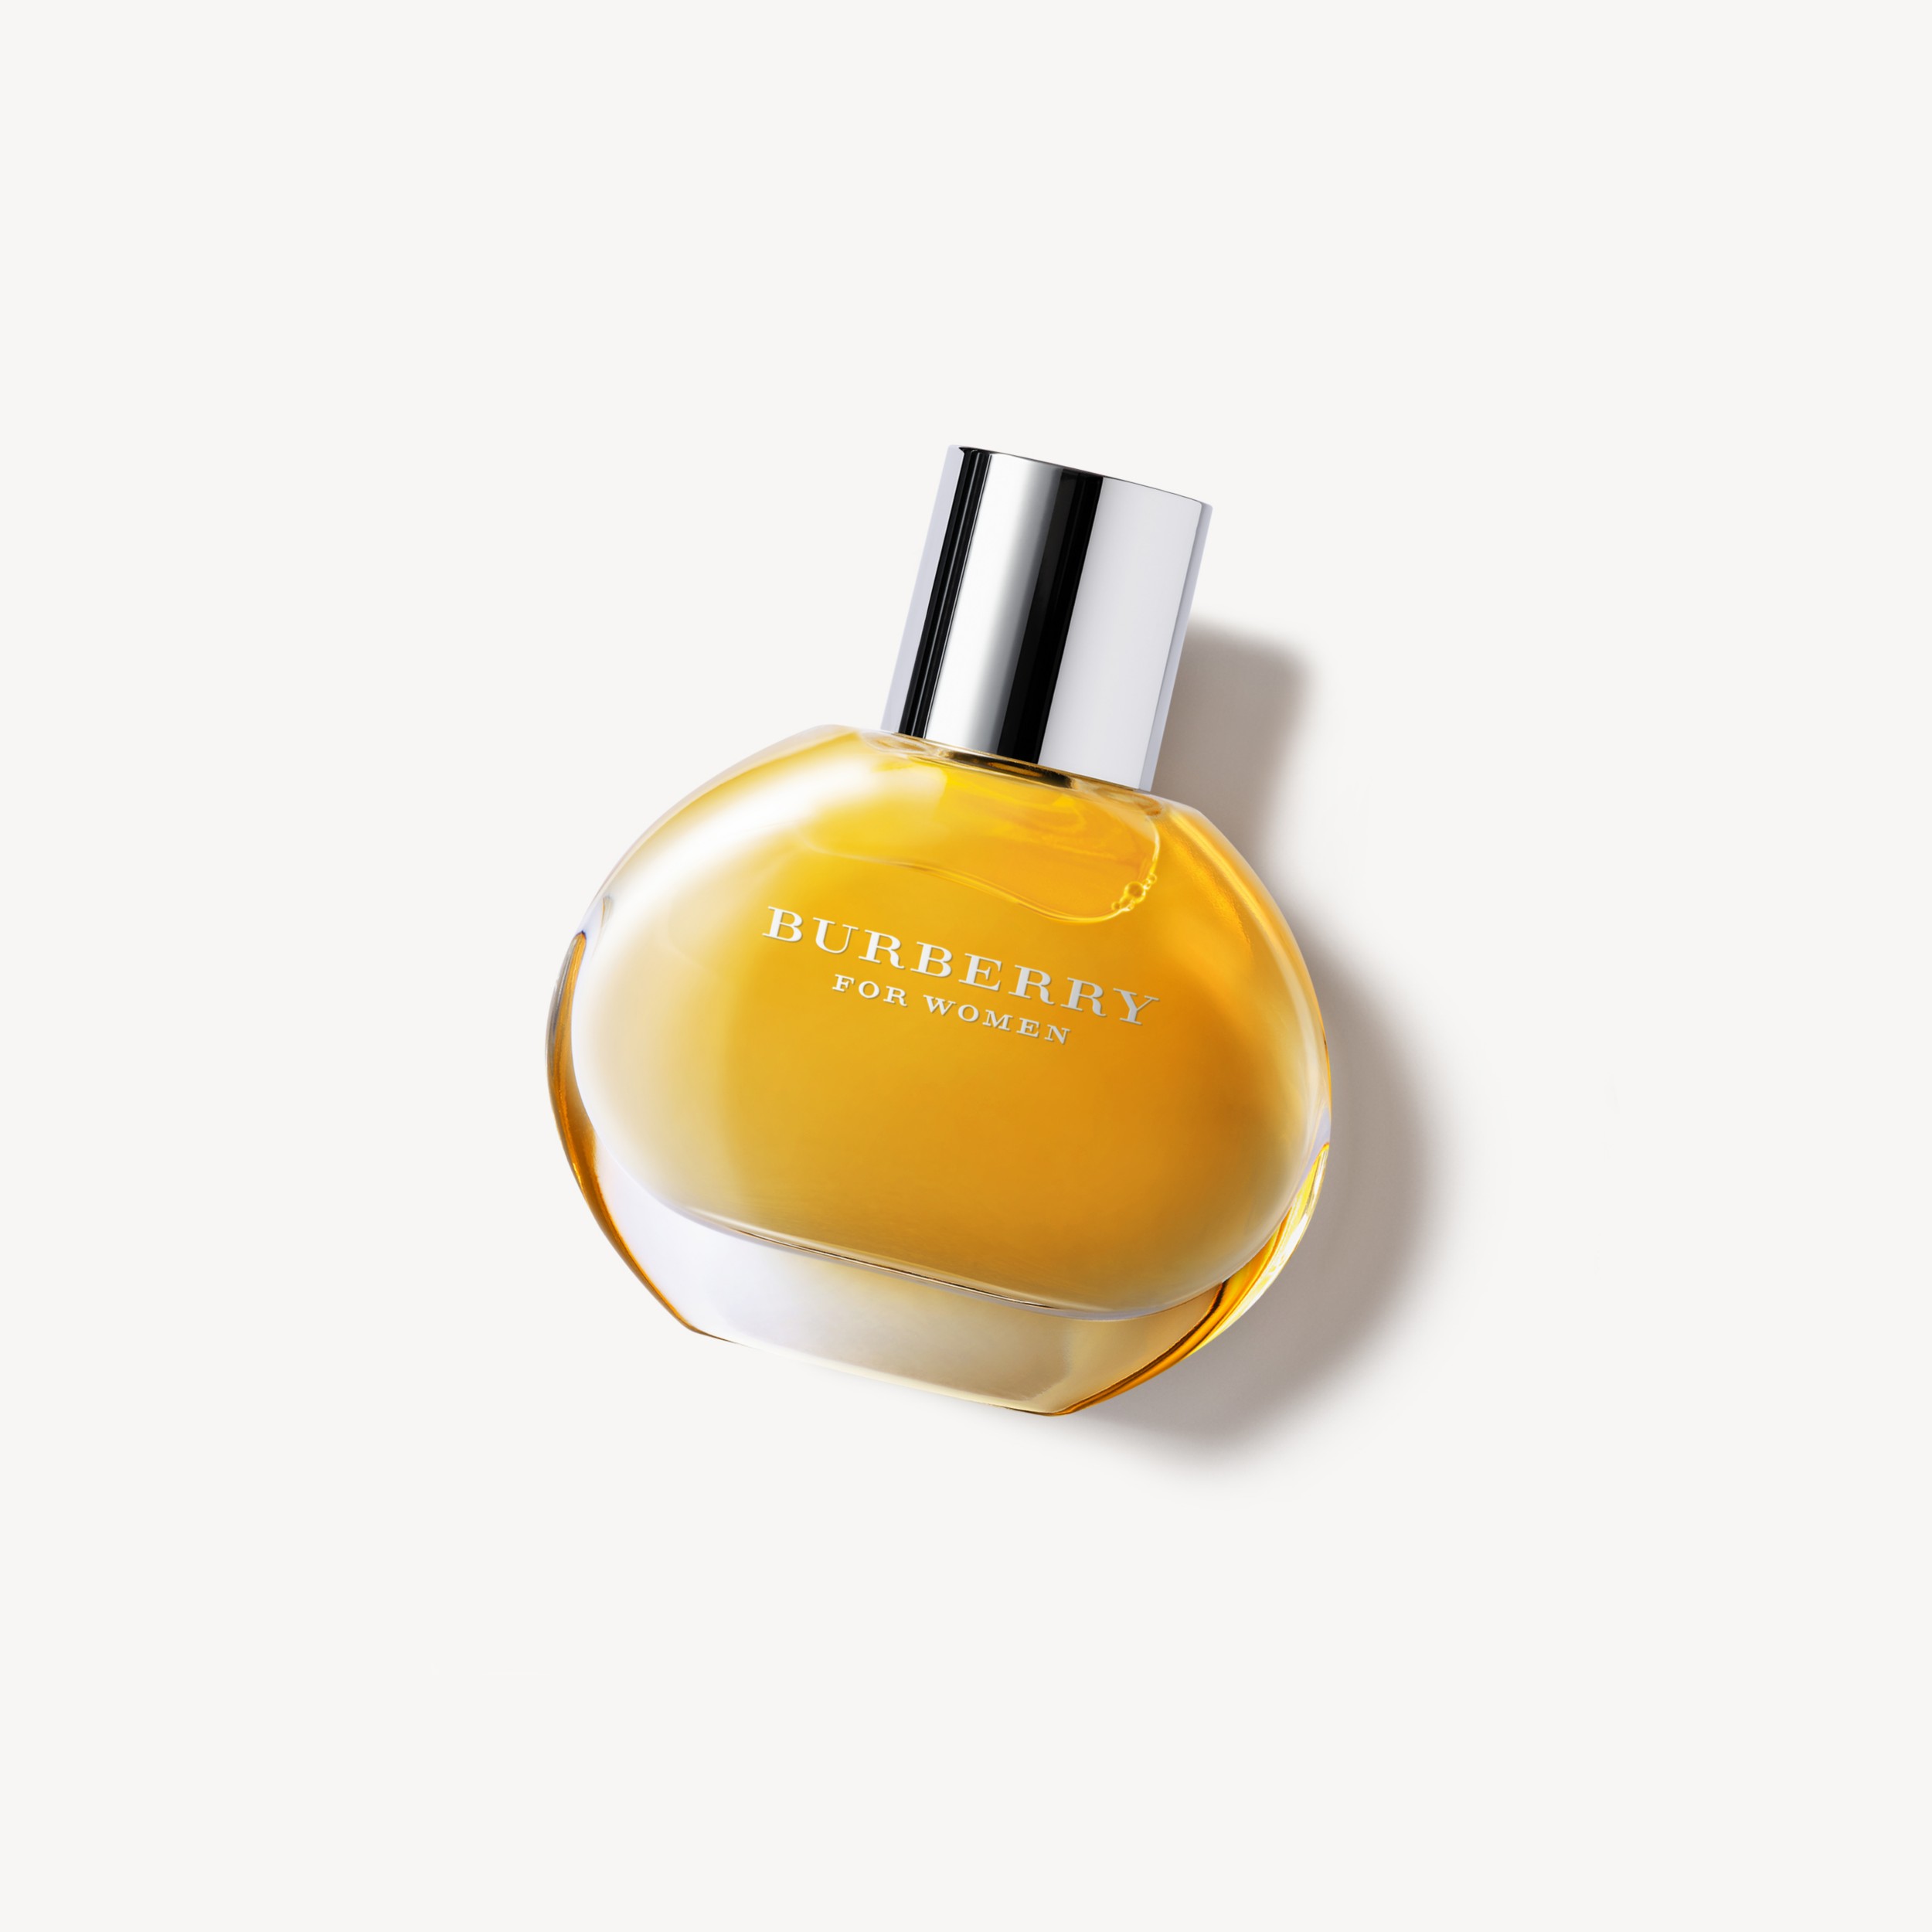 Burberry For Women Eau Parfum 50ml | Burberry® Official